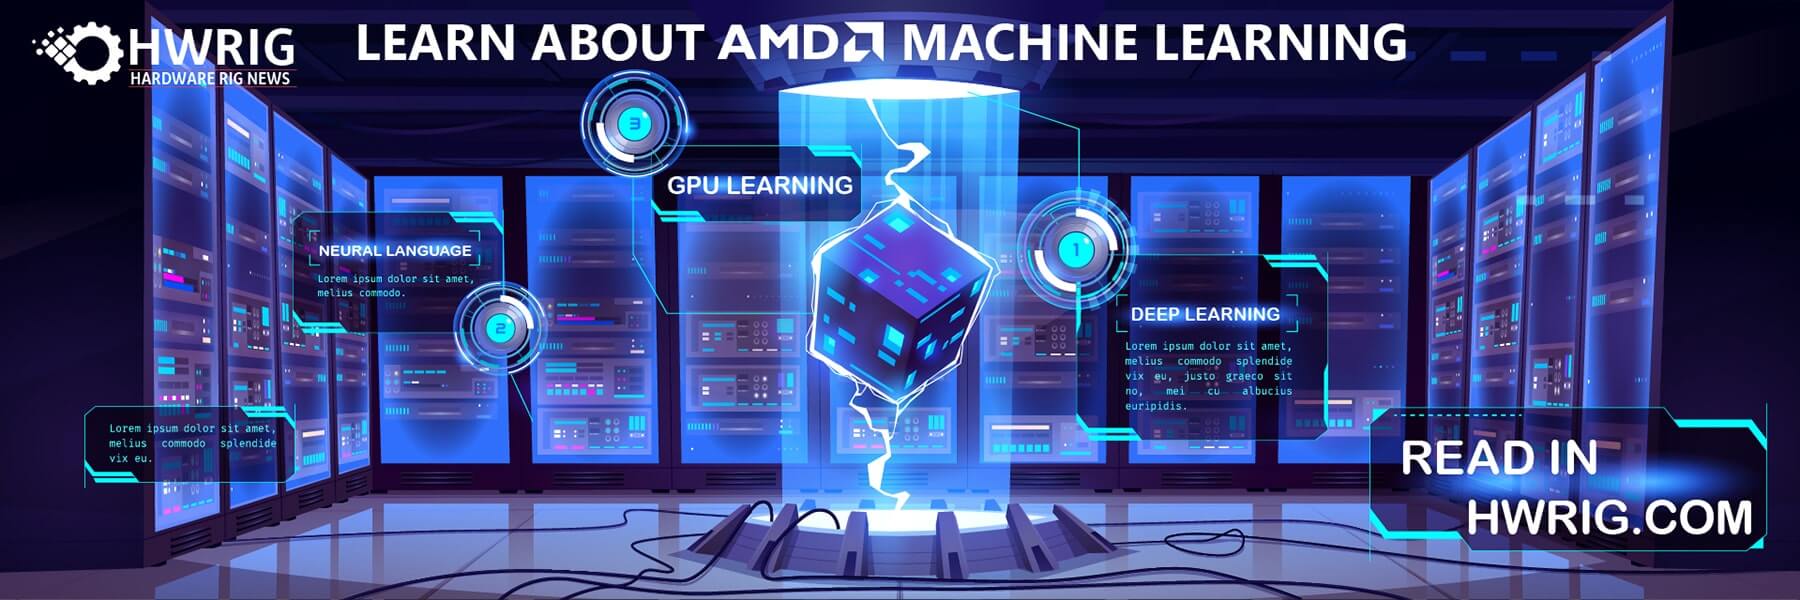 AMD-Machine-Learning-1